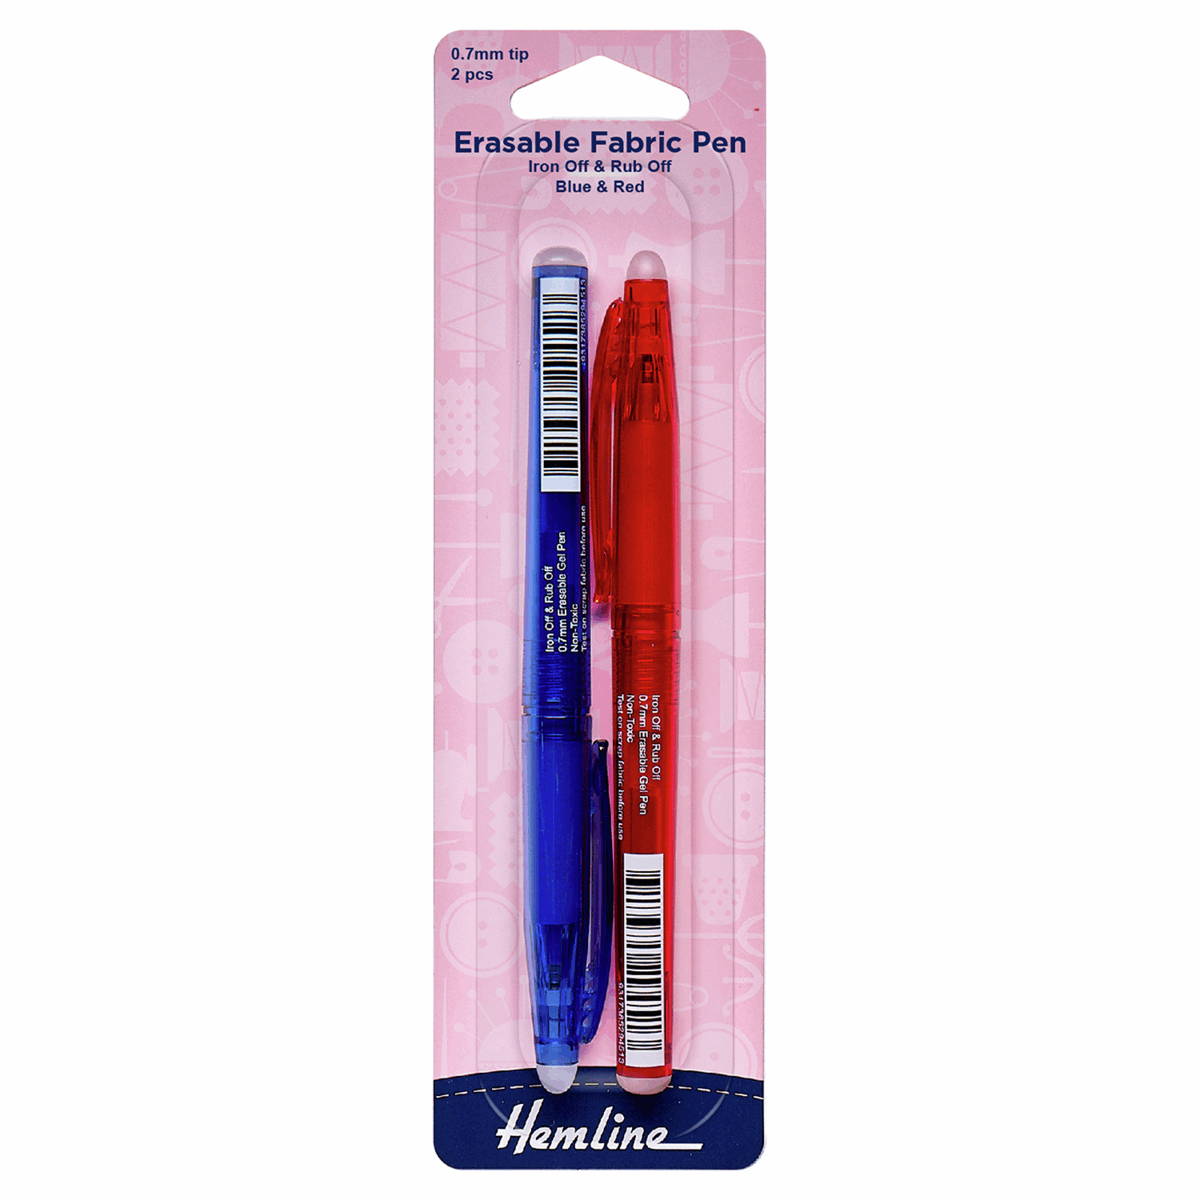 Hemline Erasable Fabric Pens - Blue & Red (Pack of 2)